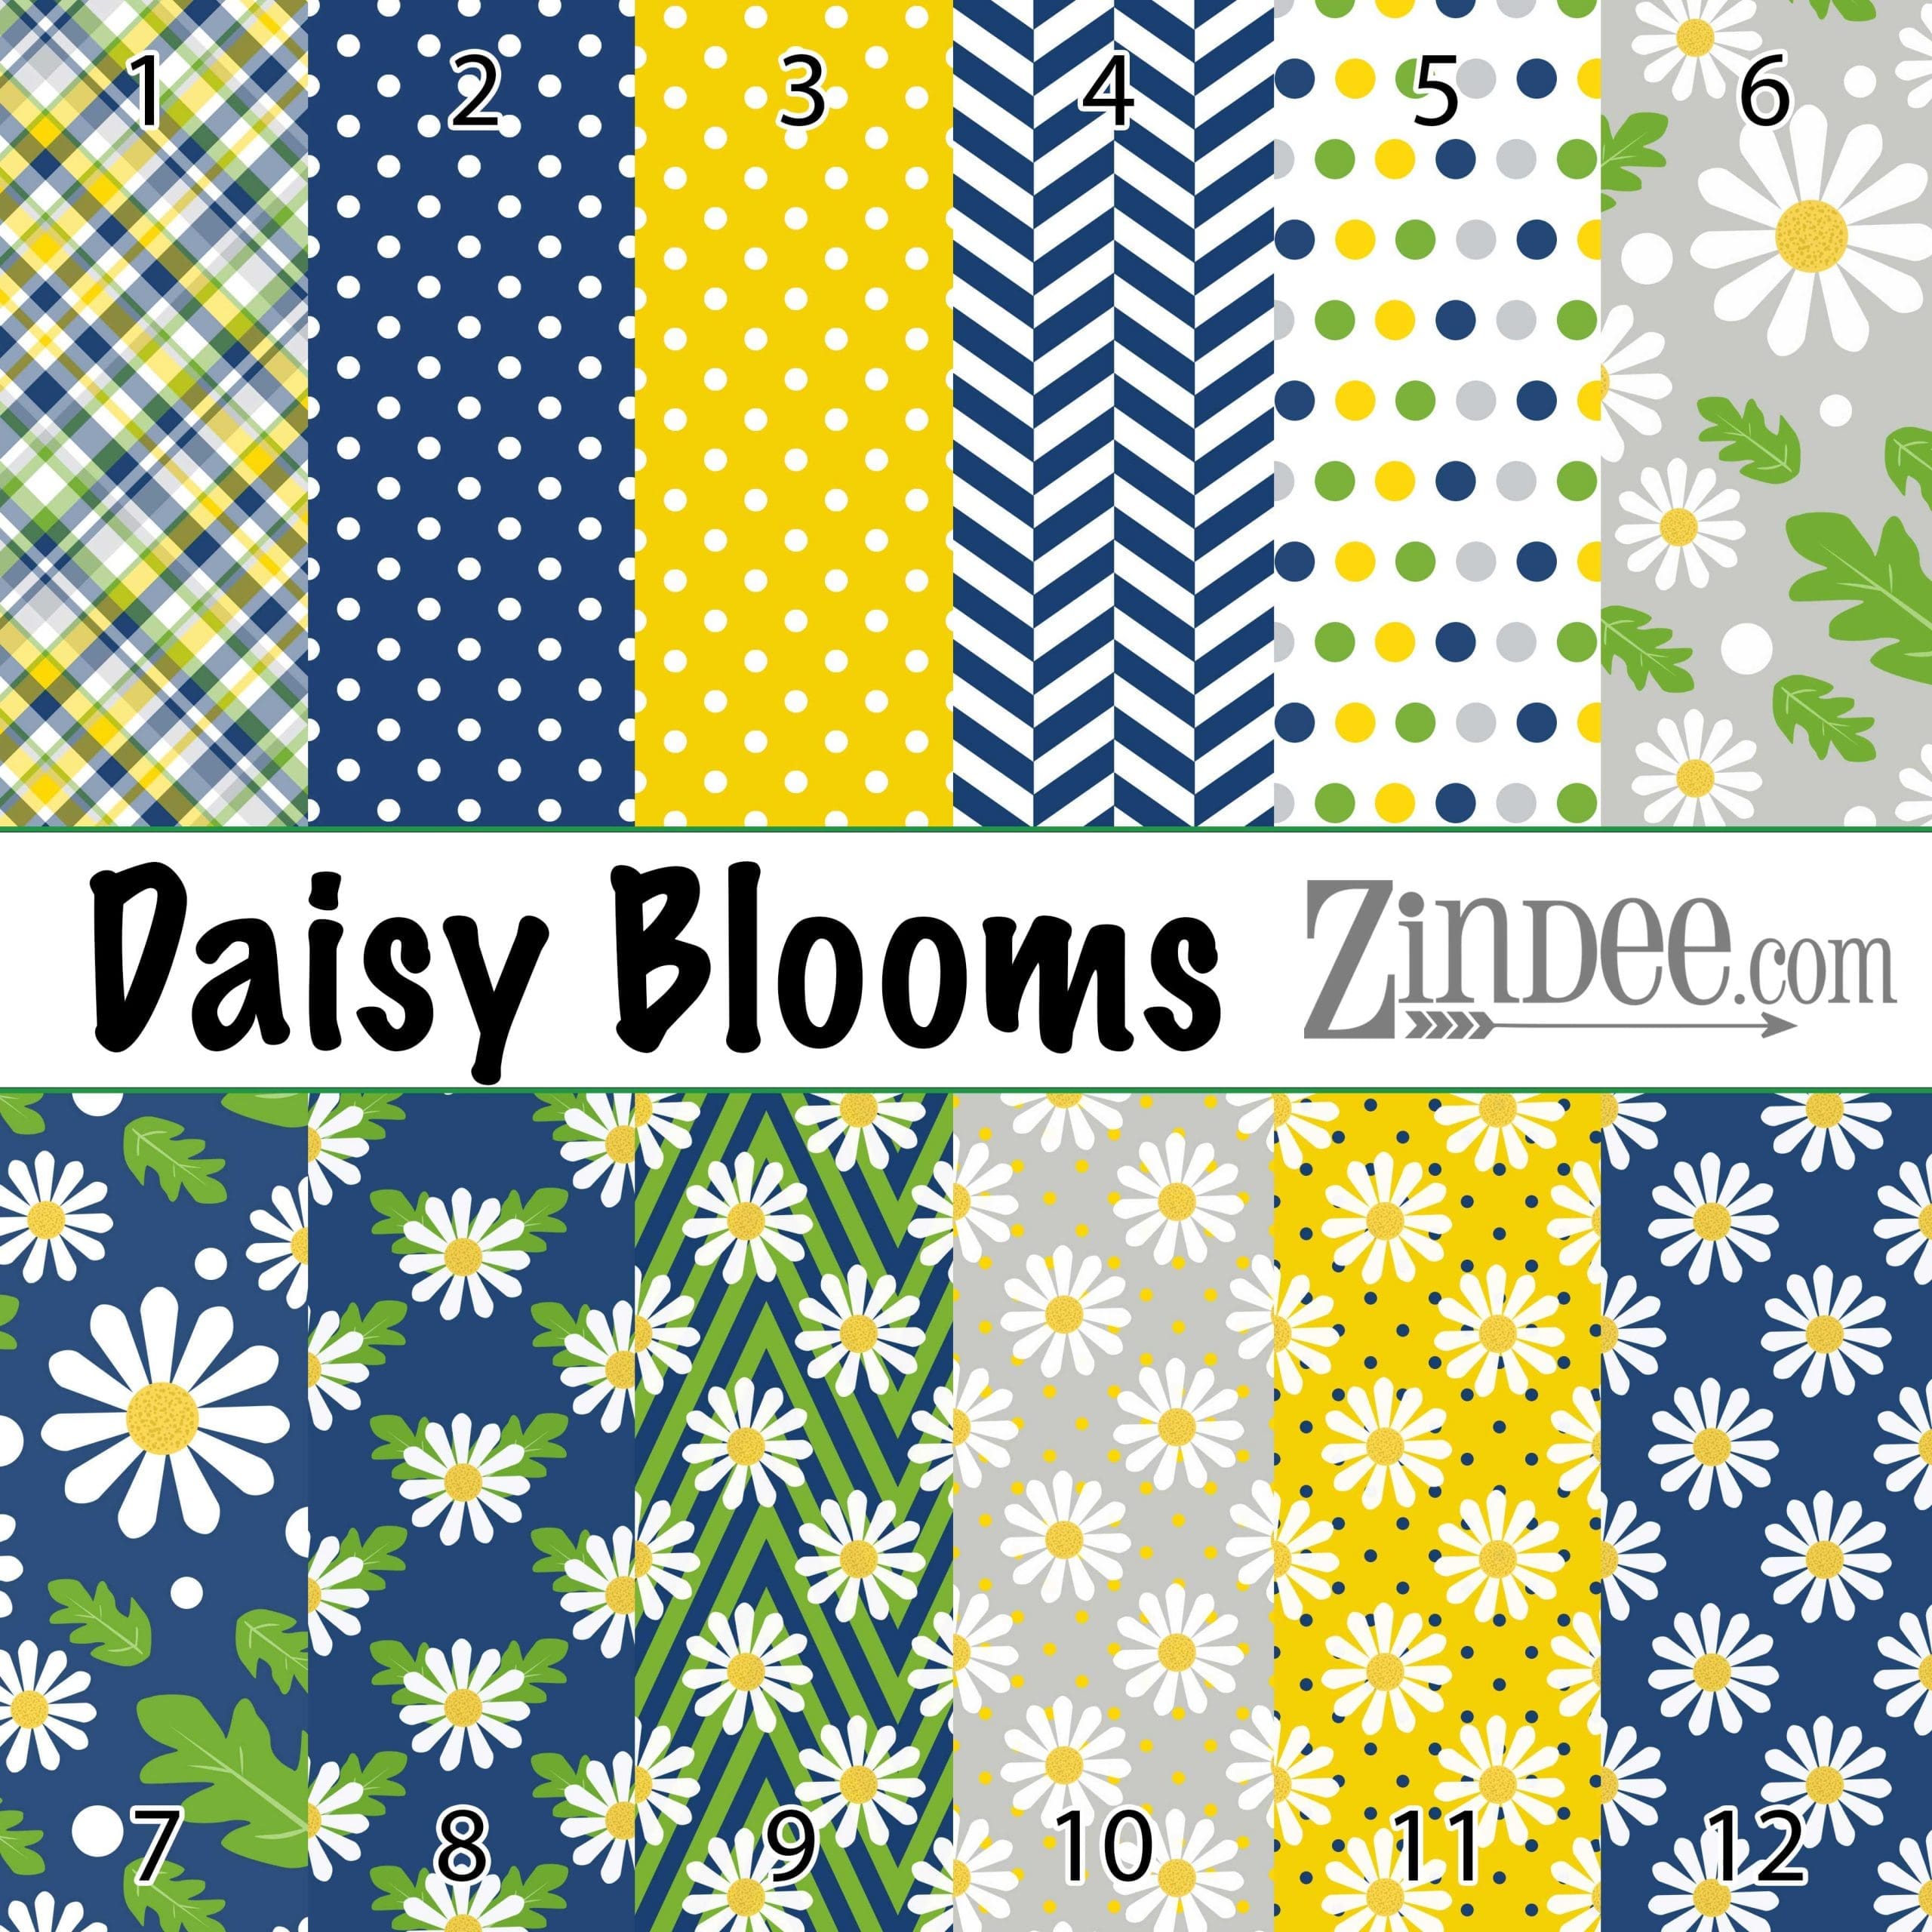 Daisy Blooms (vinyl)